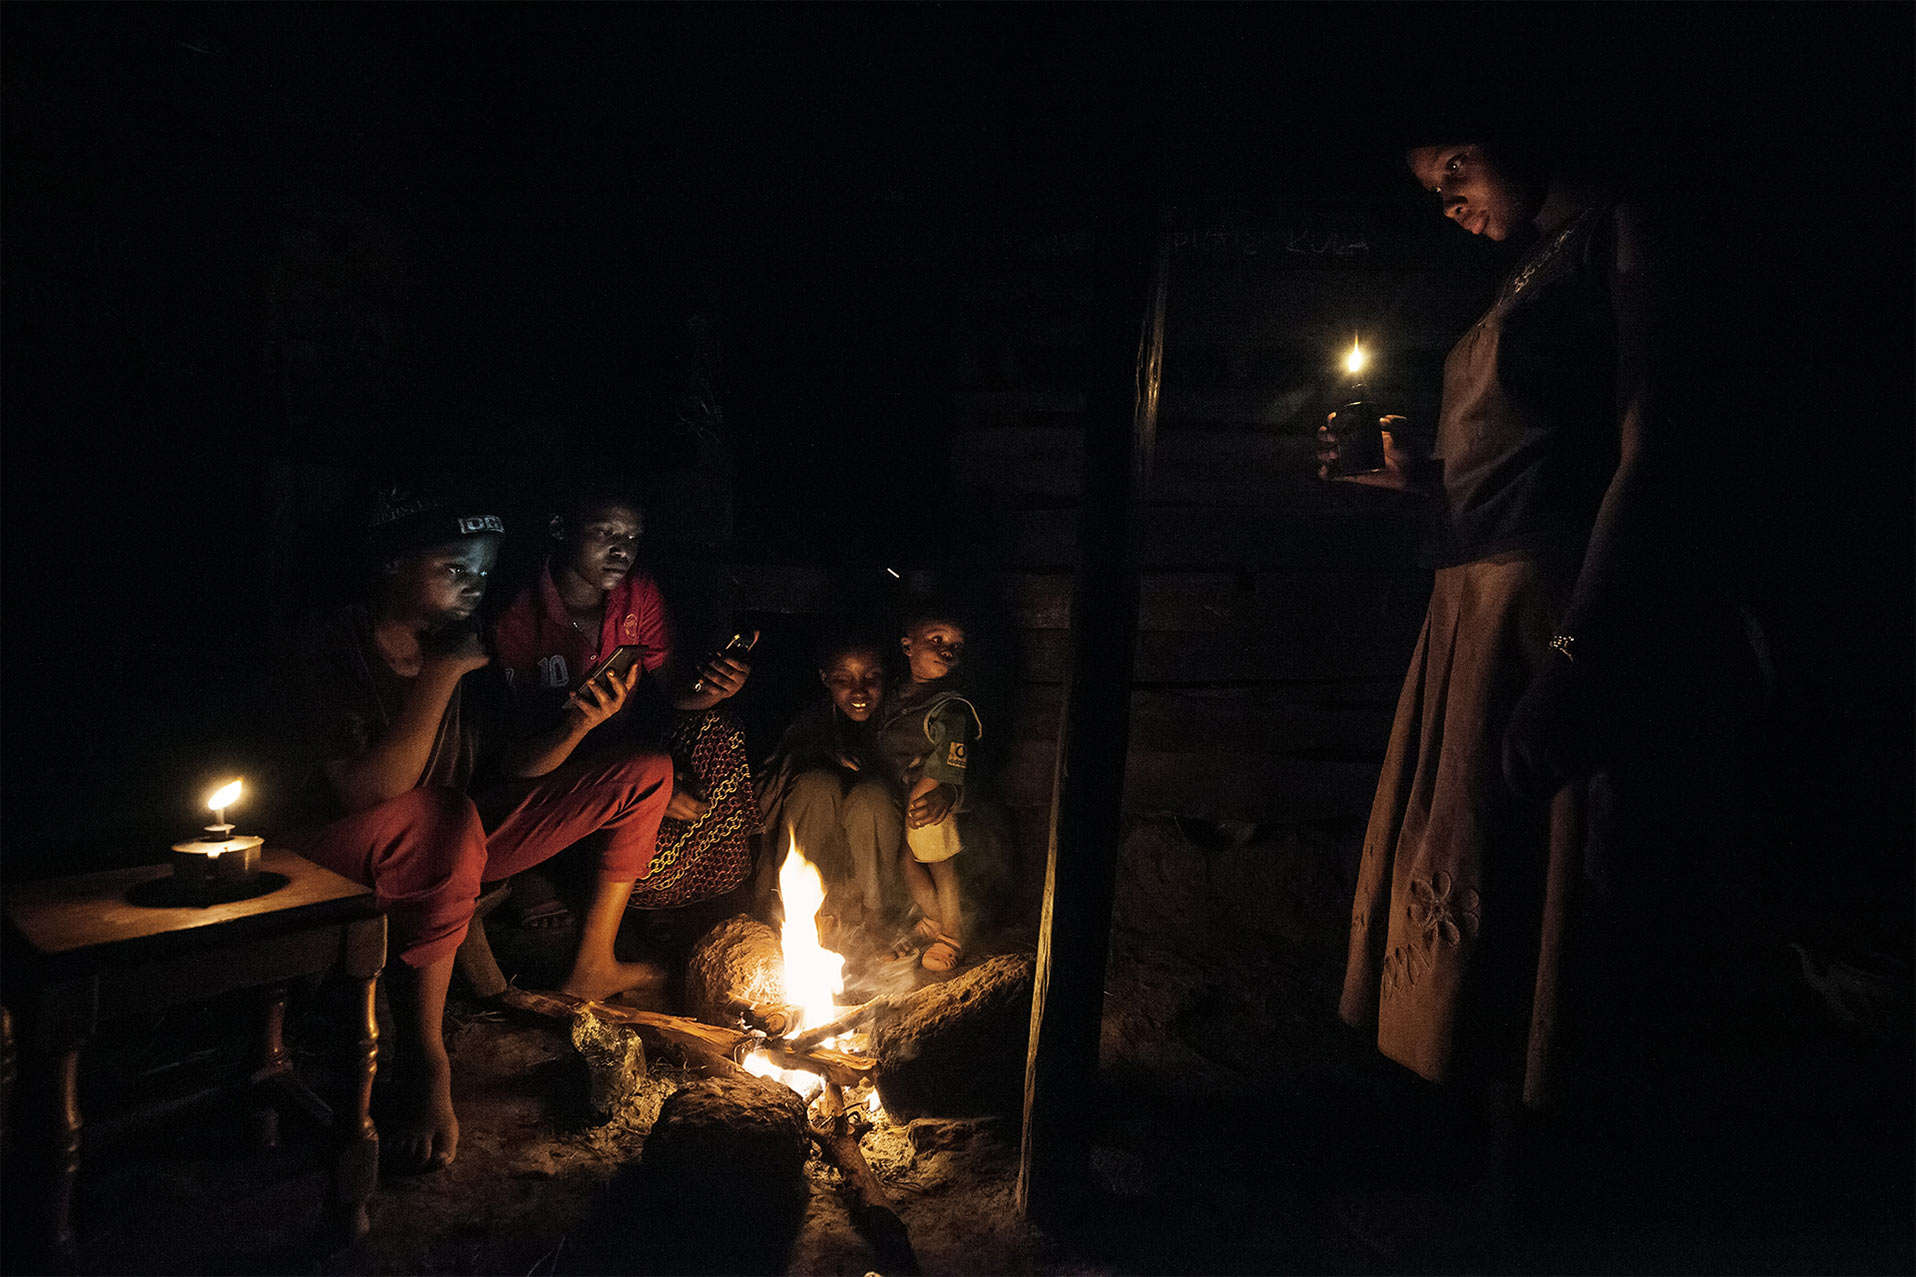  Famiglia senza energia elettrica. Energy portraits - Reportage del fotografo Marco Garofalo